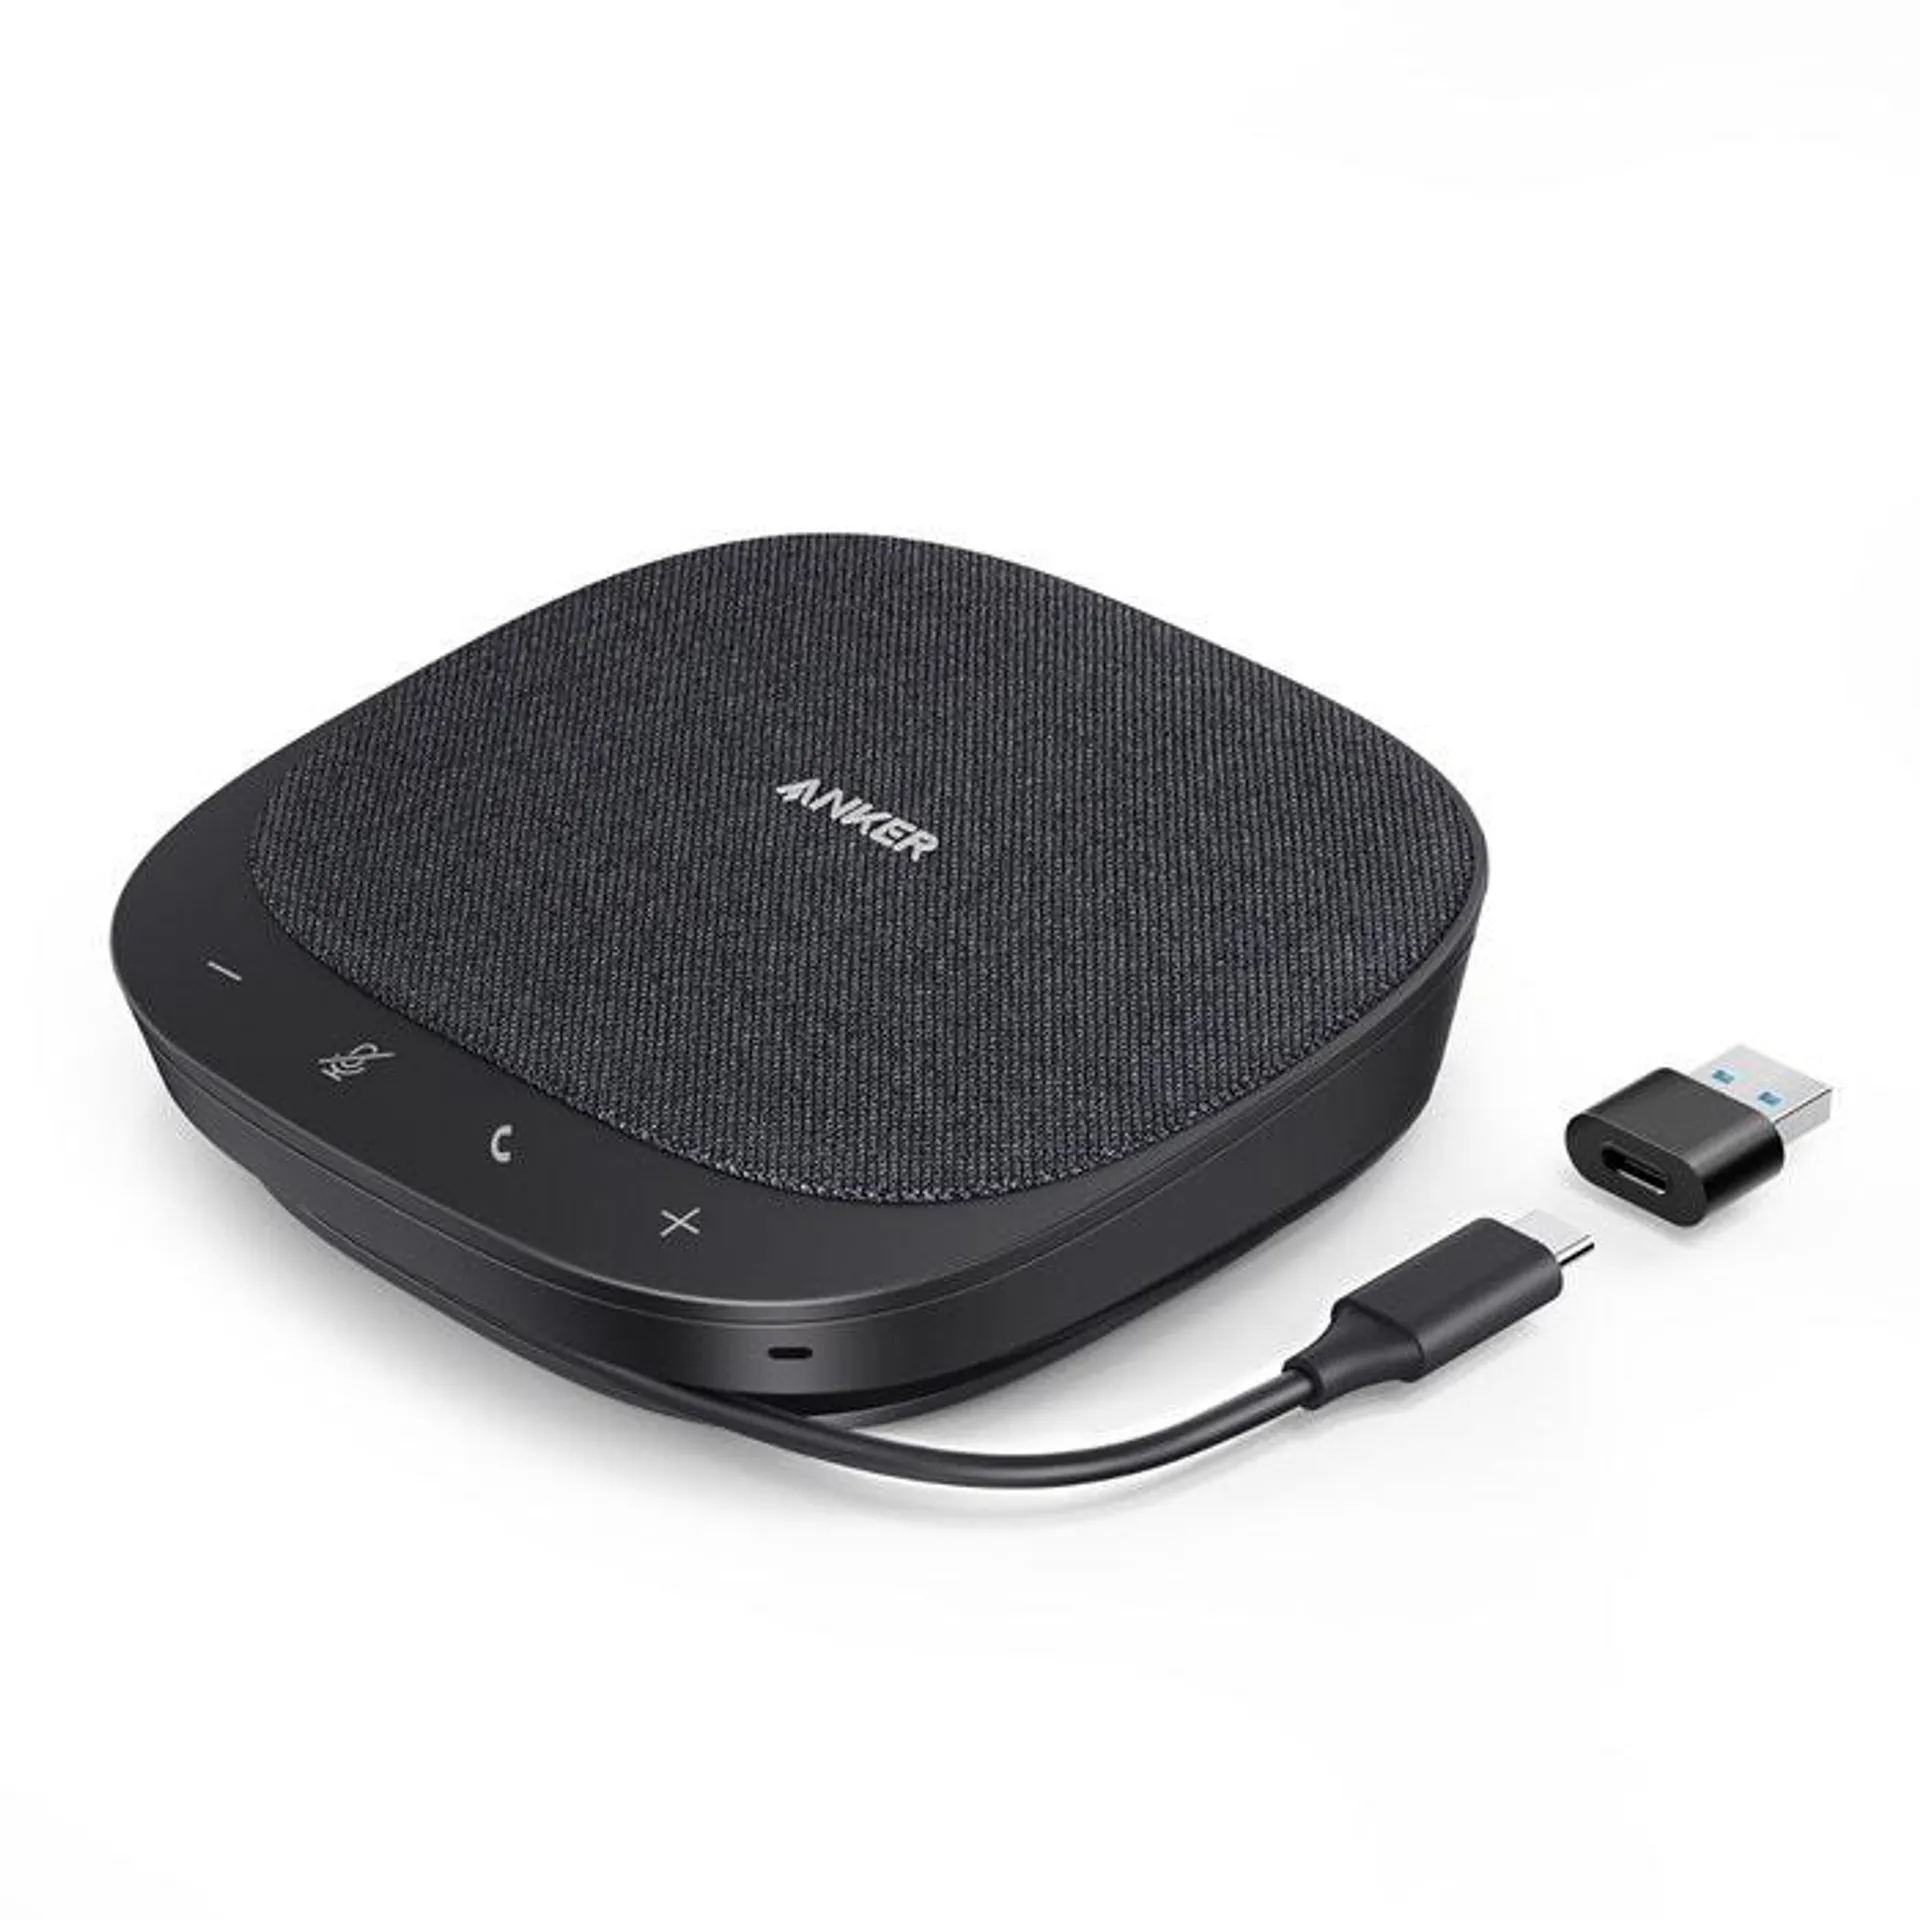 Anker PowerConf S330 USB Conference Speakerphone - Black